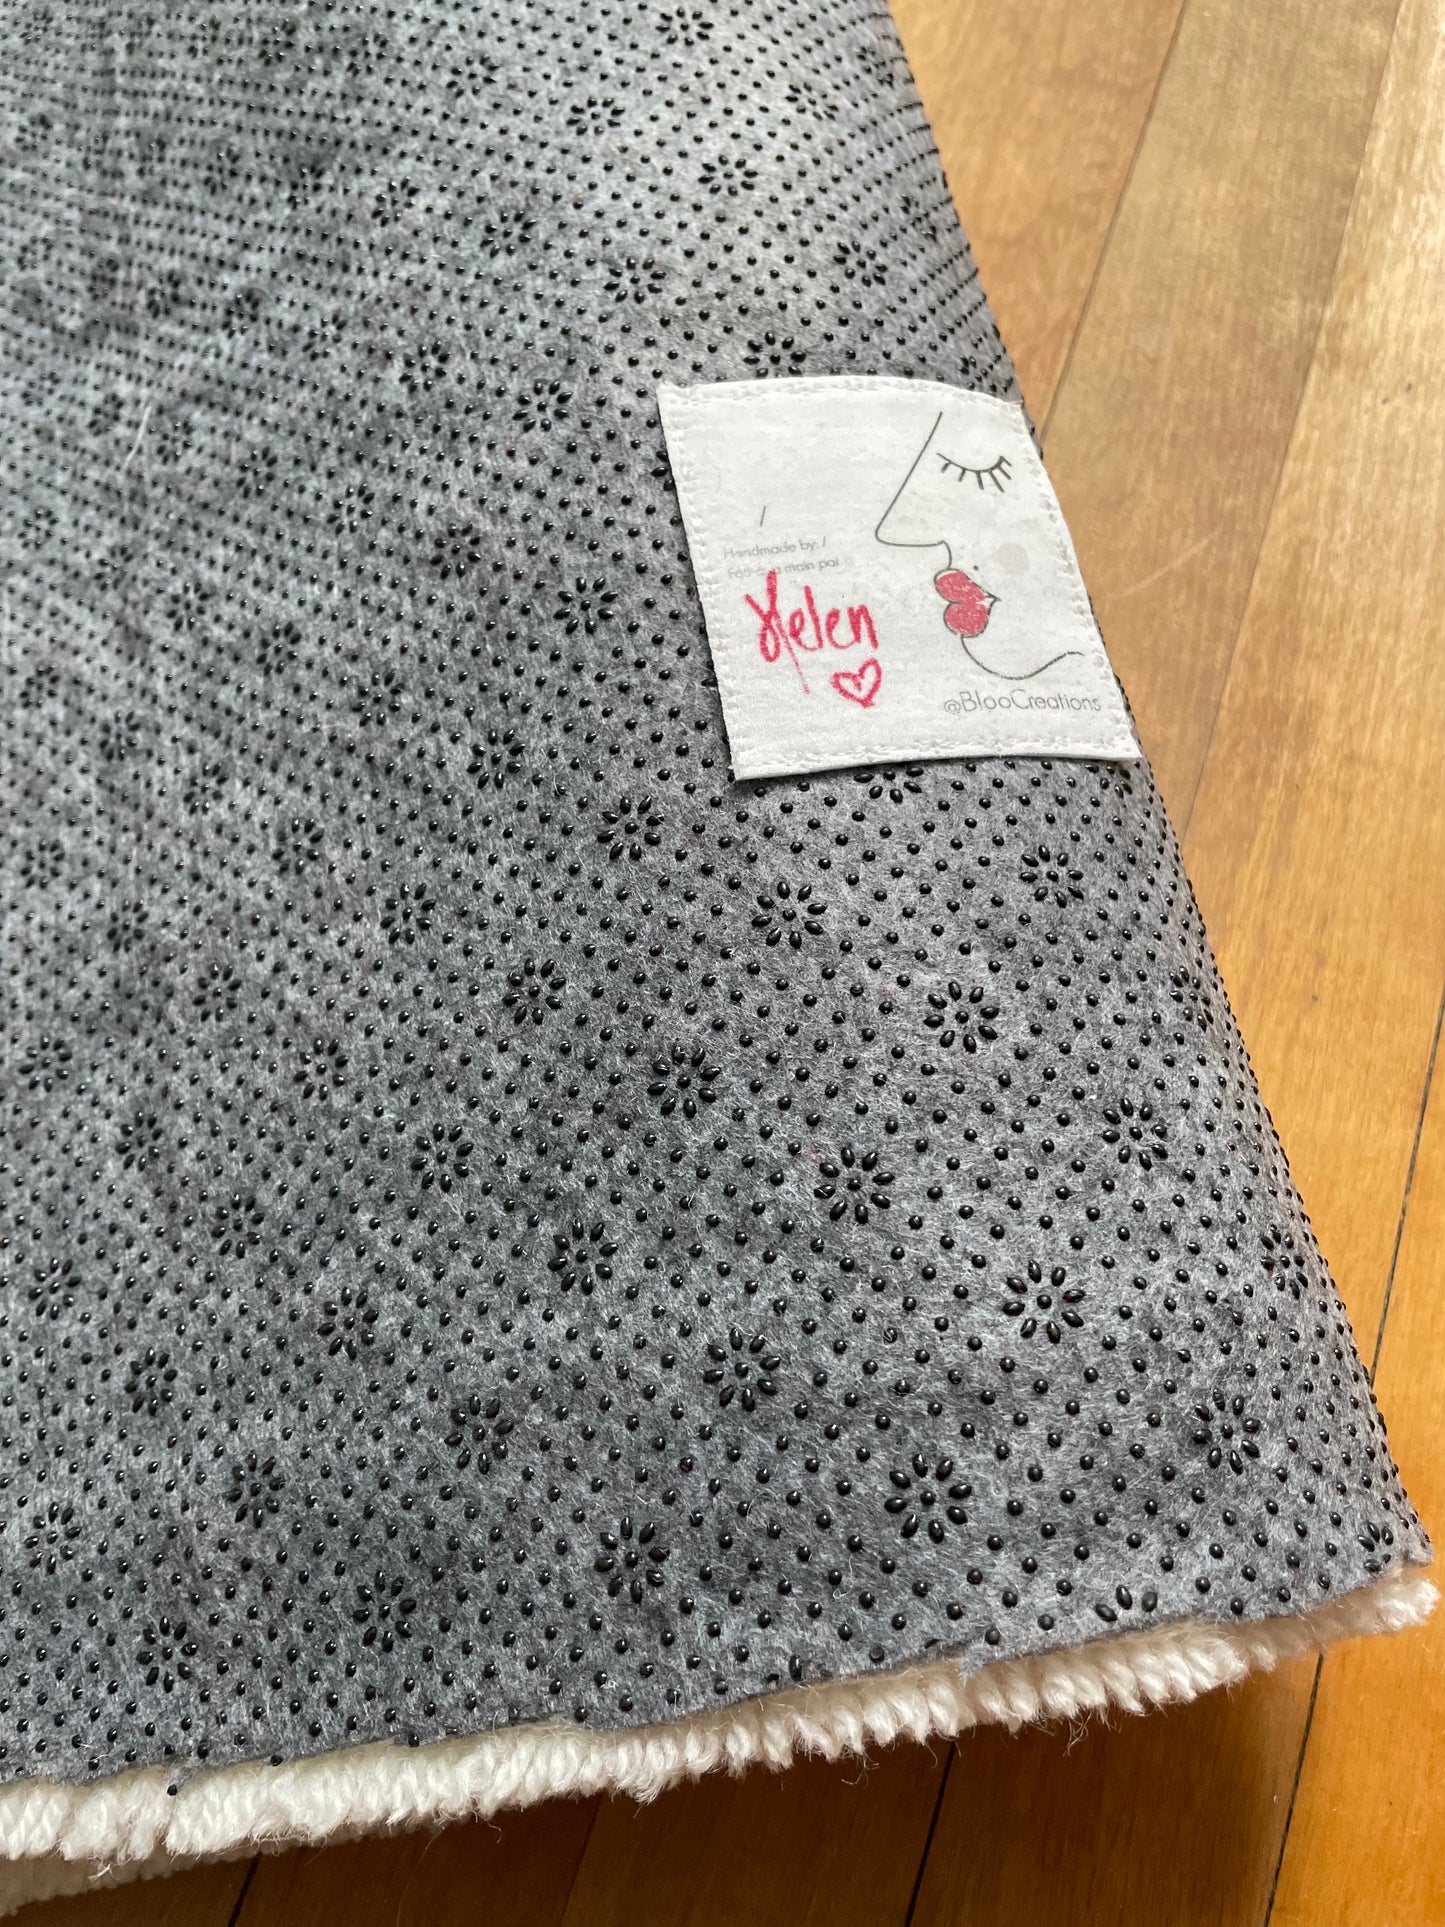 Miss Polka Dots - Handmade tufted rug - 100% Wool - Home decor carpet - Abstract Art